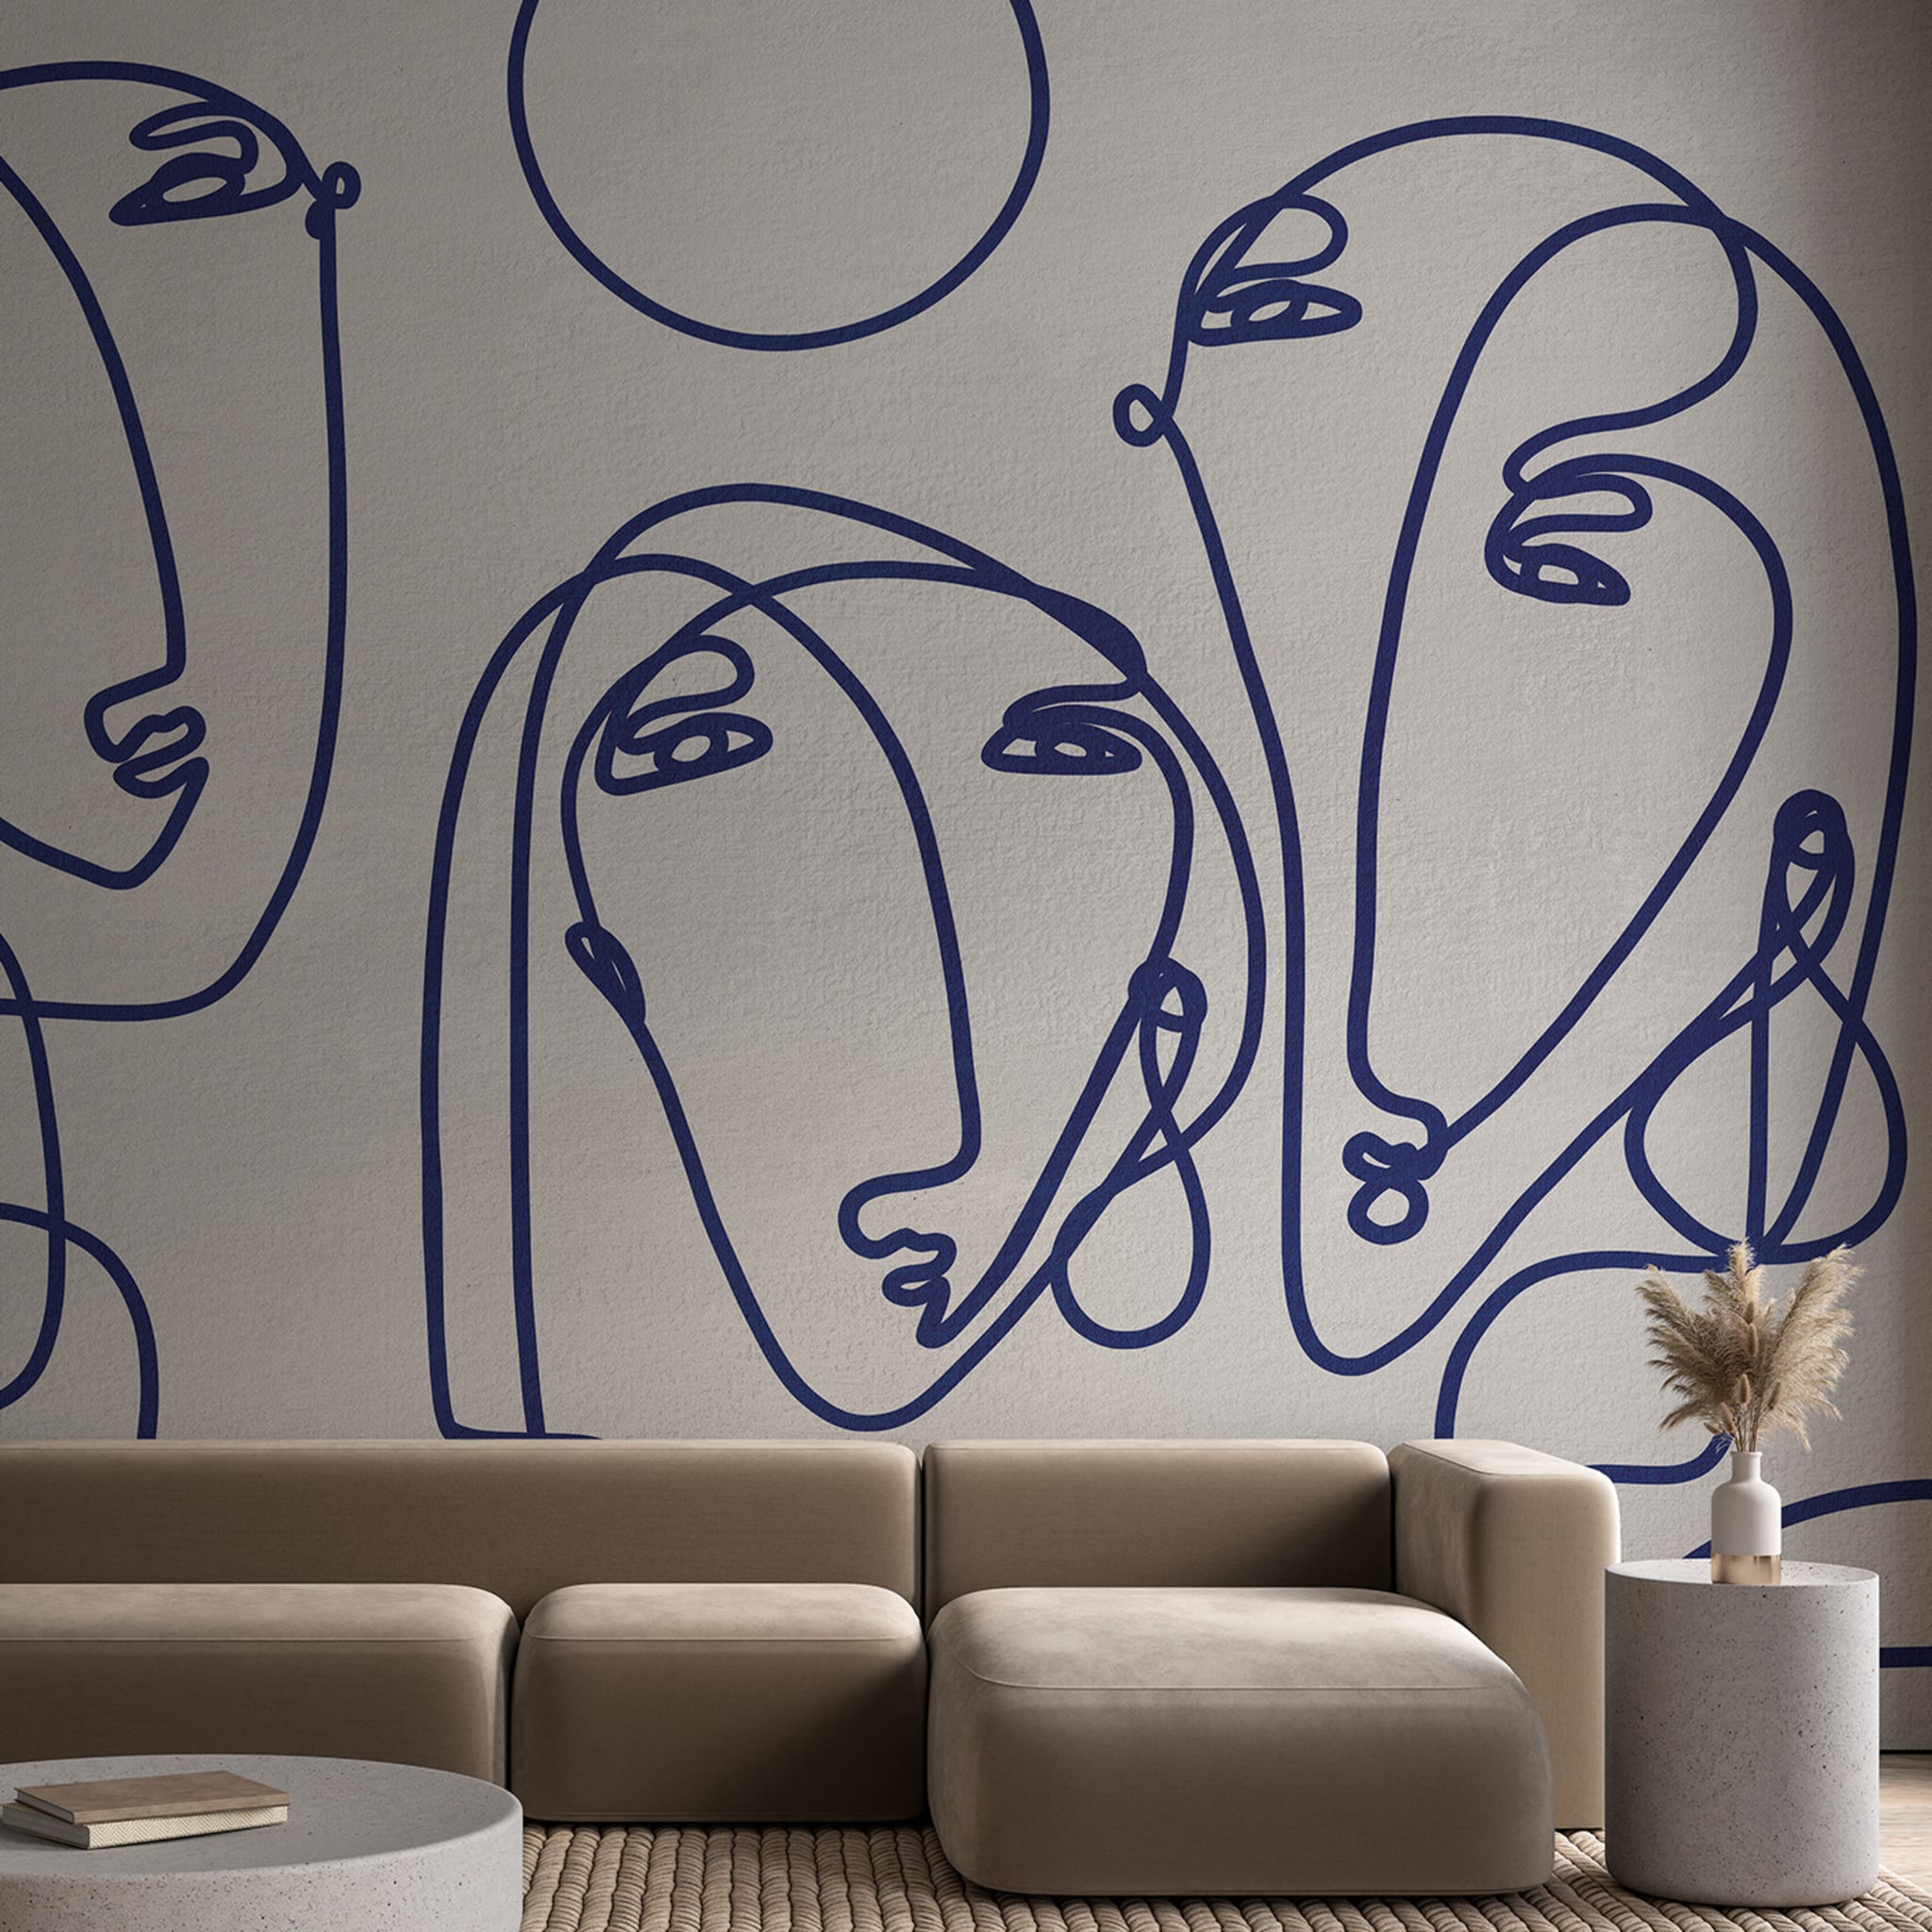 Blue singular faces textured wallpaper - Alternative view 1